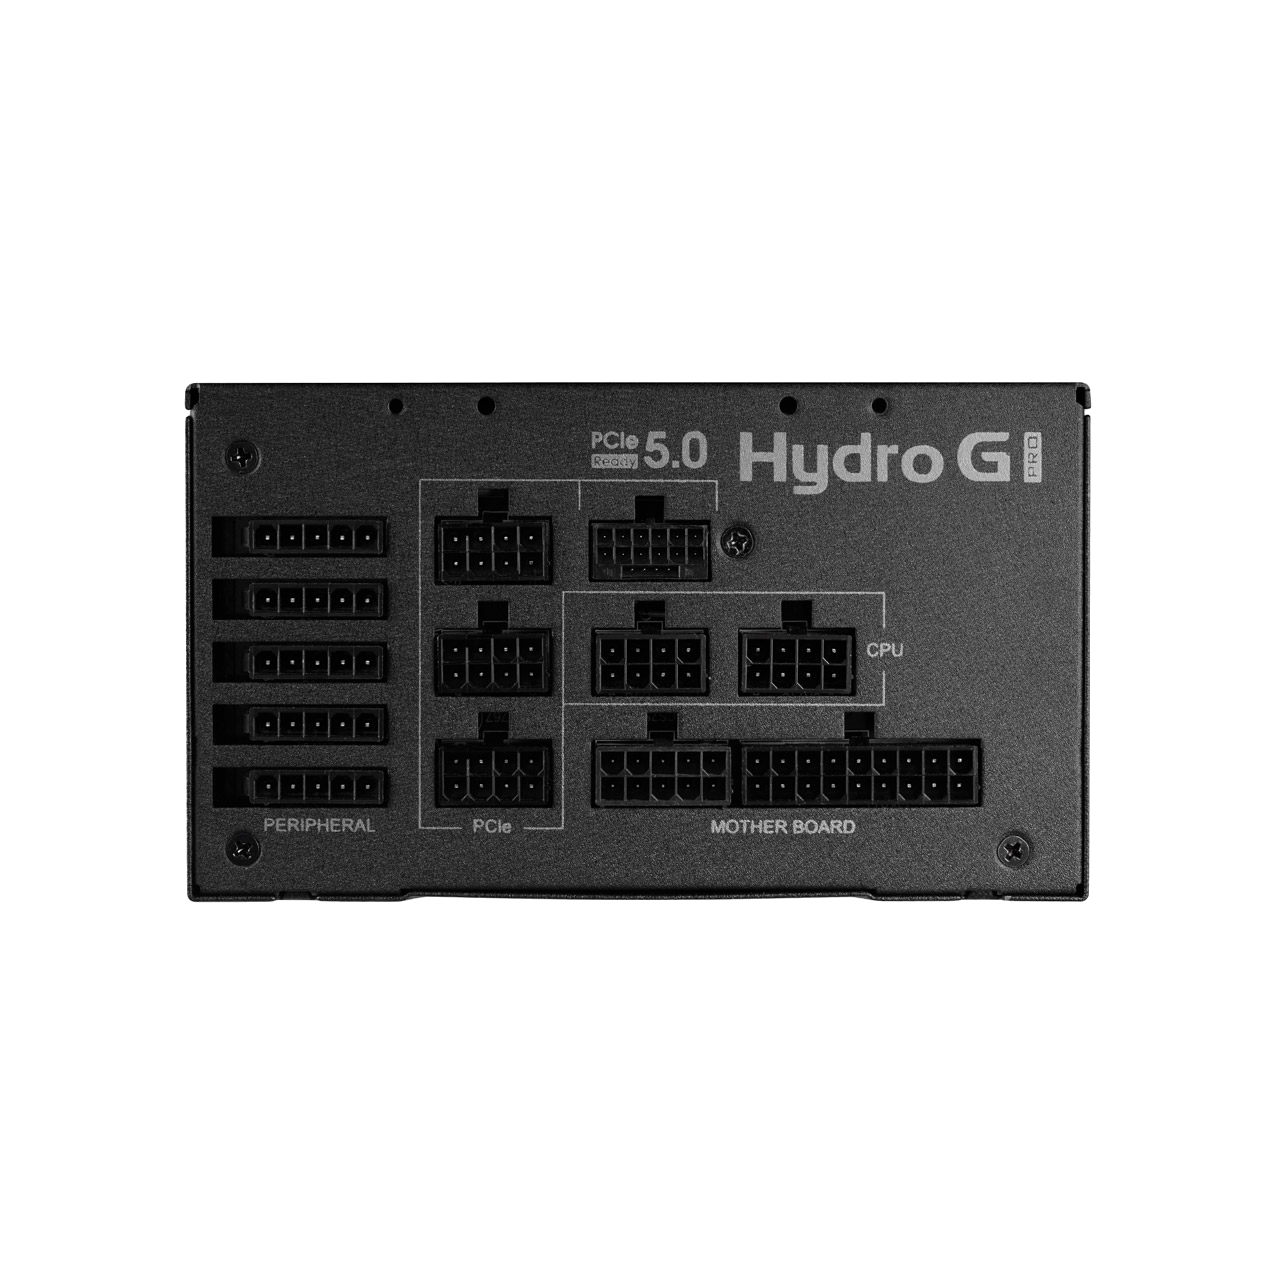 FSP Hydro G Pro 1000W 80+ Gold (PCIe 5.0) Fully Modular Power Supply